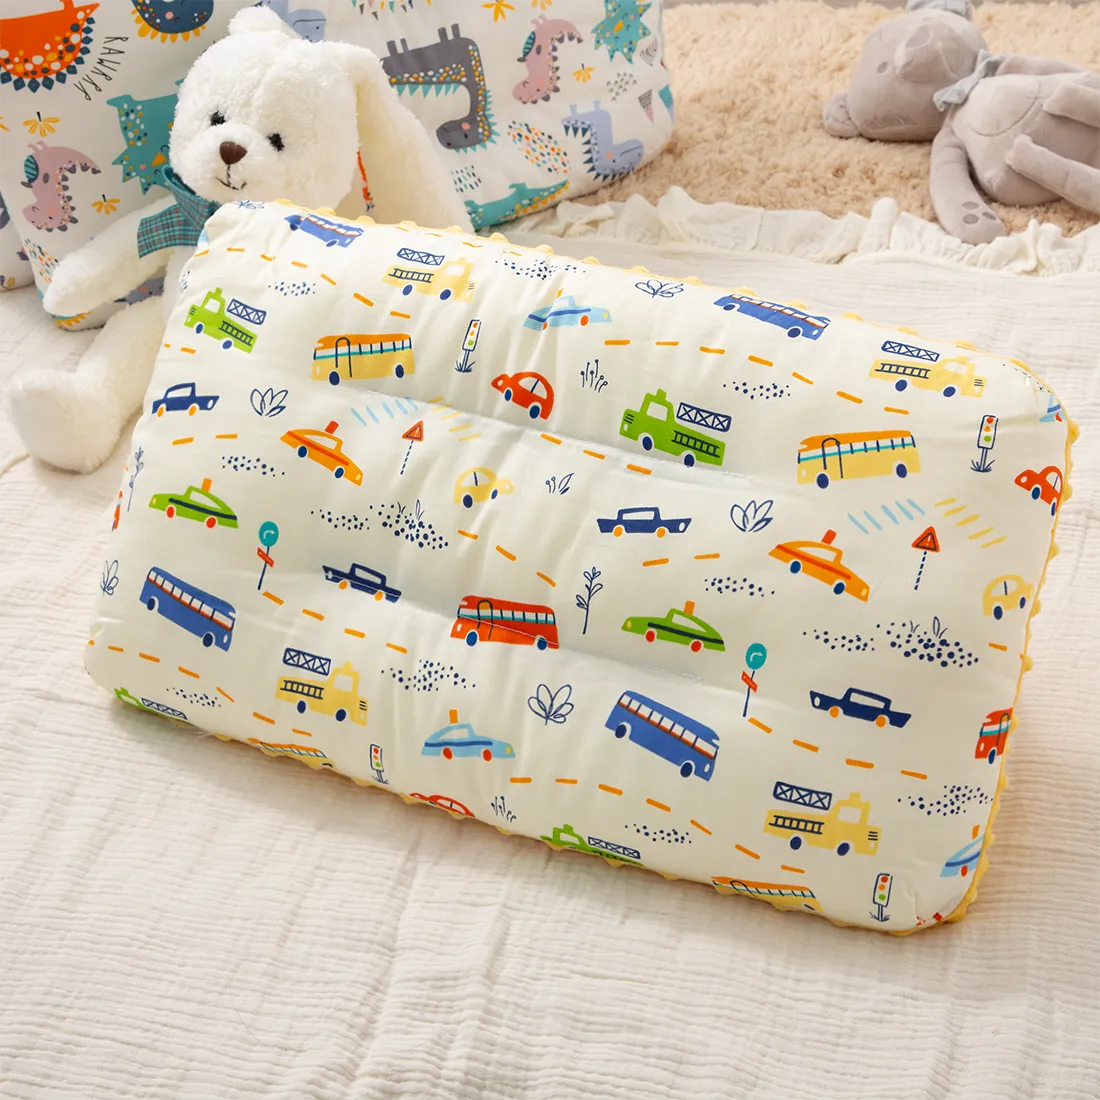 100% Cotton Baby Soothing Pillow Cartoon Dinosaur Unicorn Pattern Kids Soft Elastic Sleeping Pillows